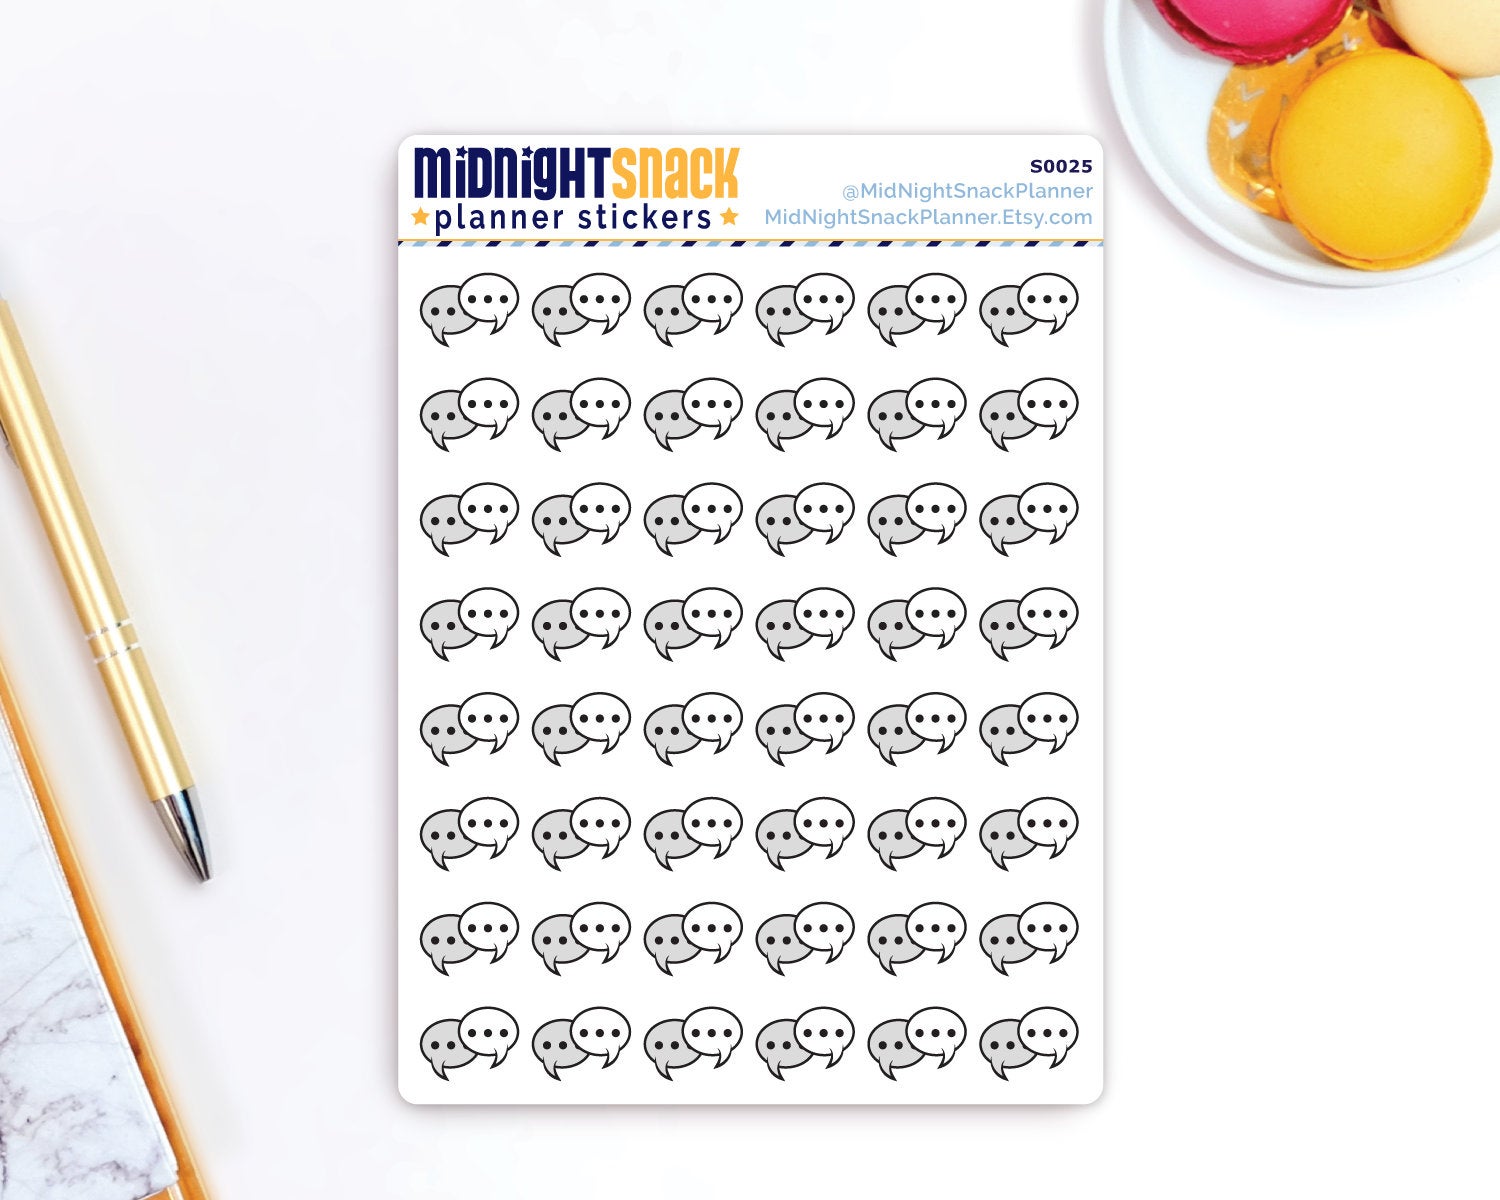 Speech Bubble Icon: Business Meeting Planner Sticker Midnight Snack Planner